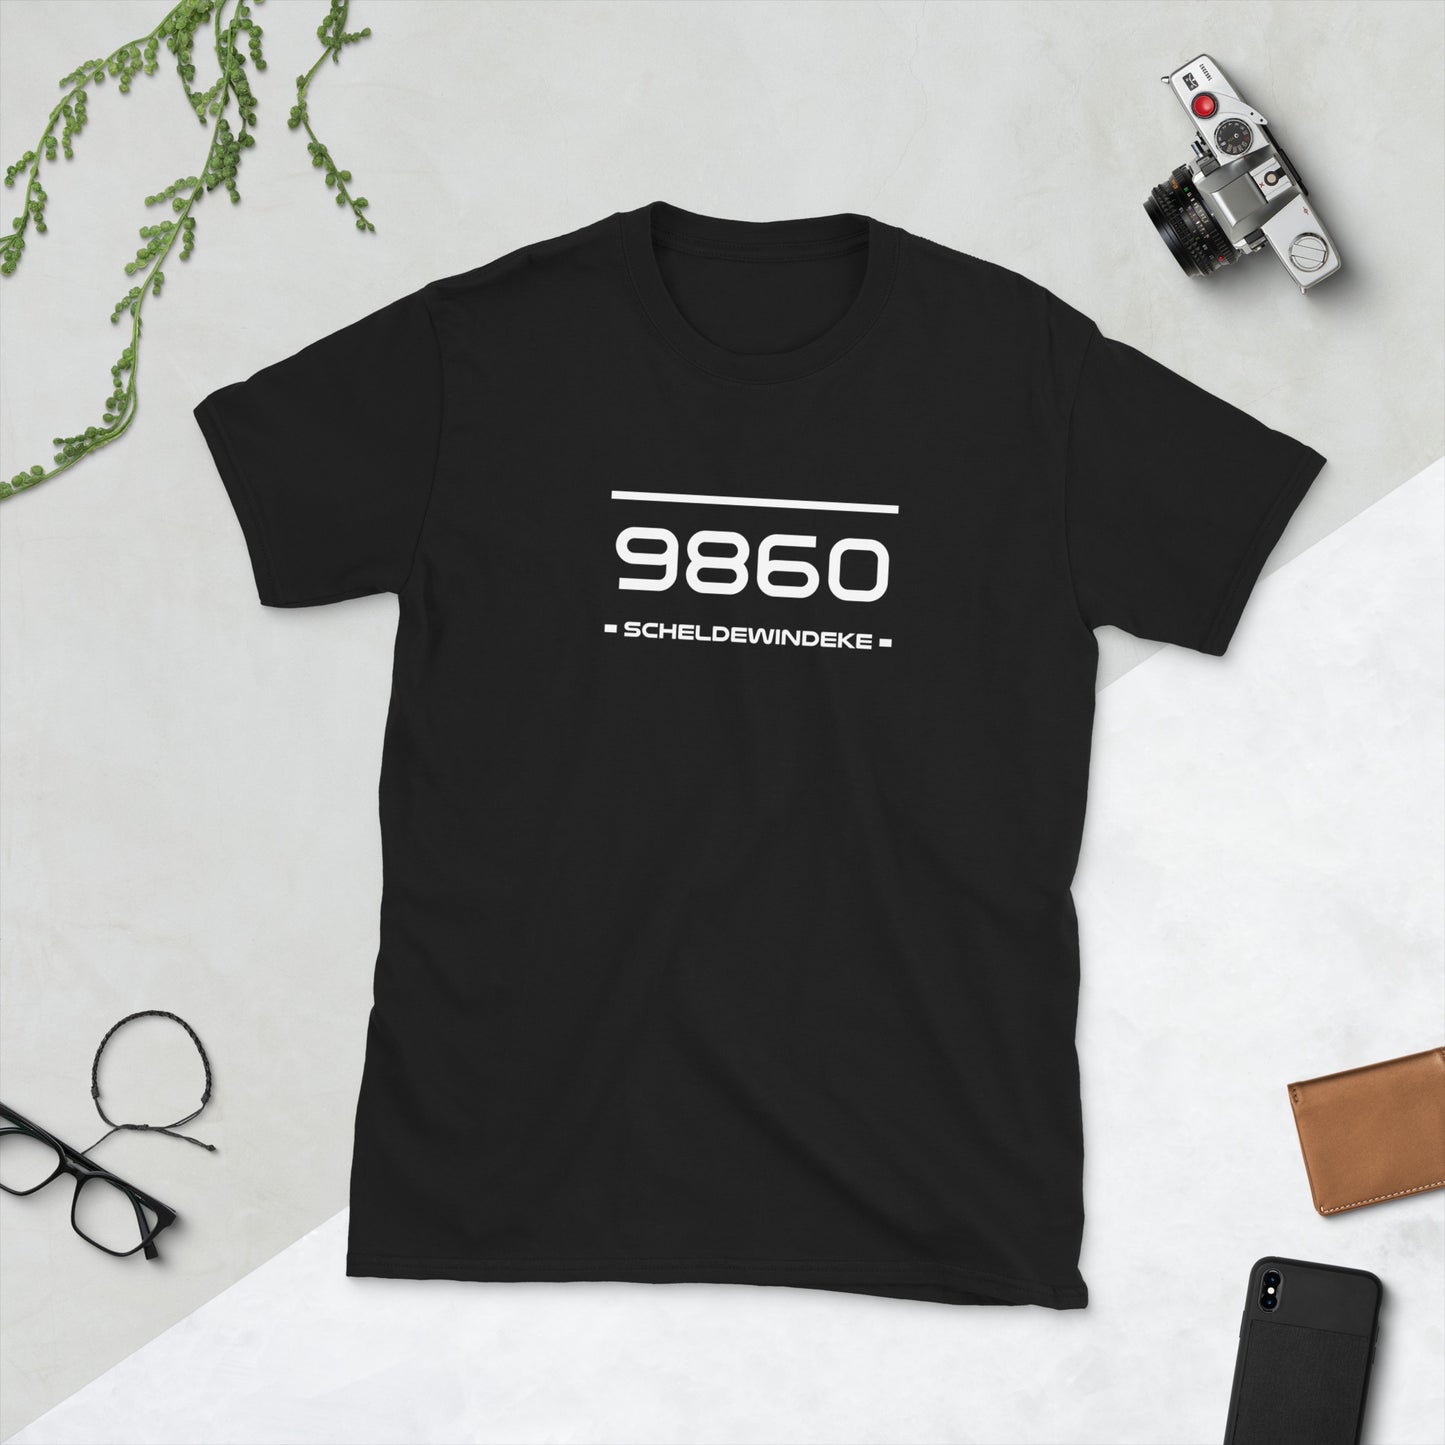 Tshirt - 9860 - Scheldewindeke